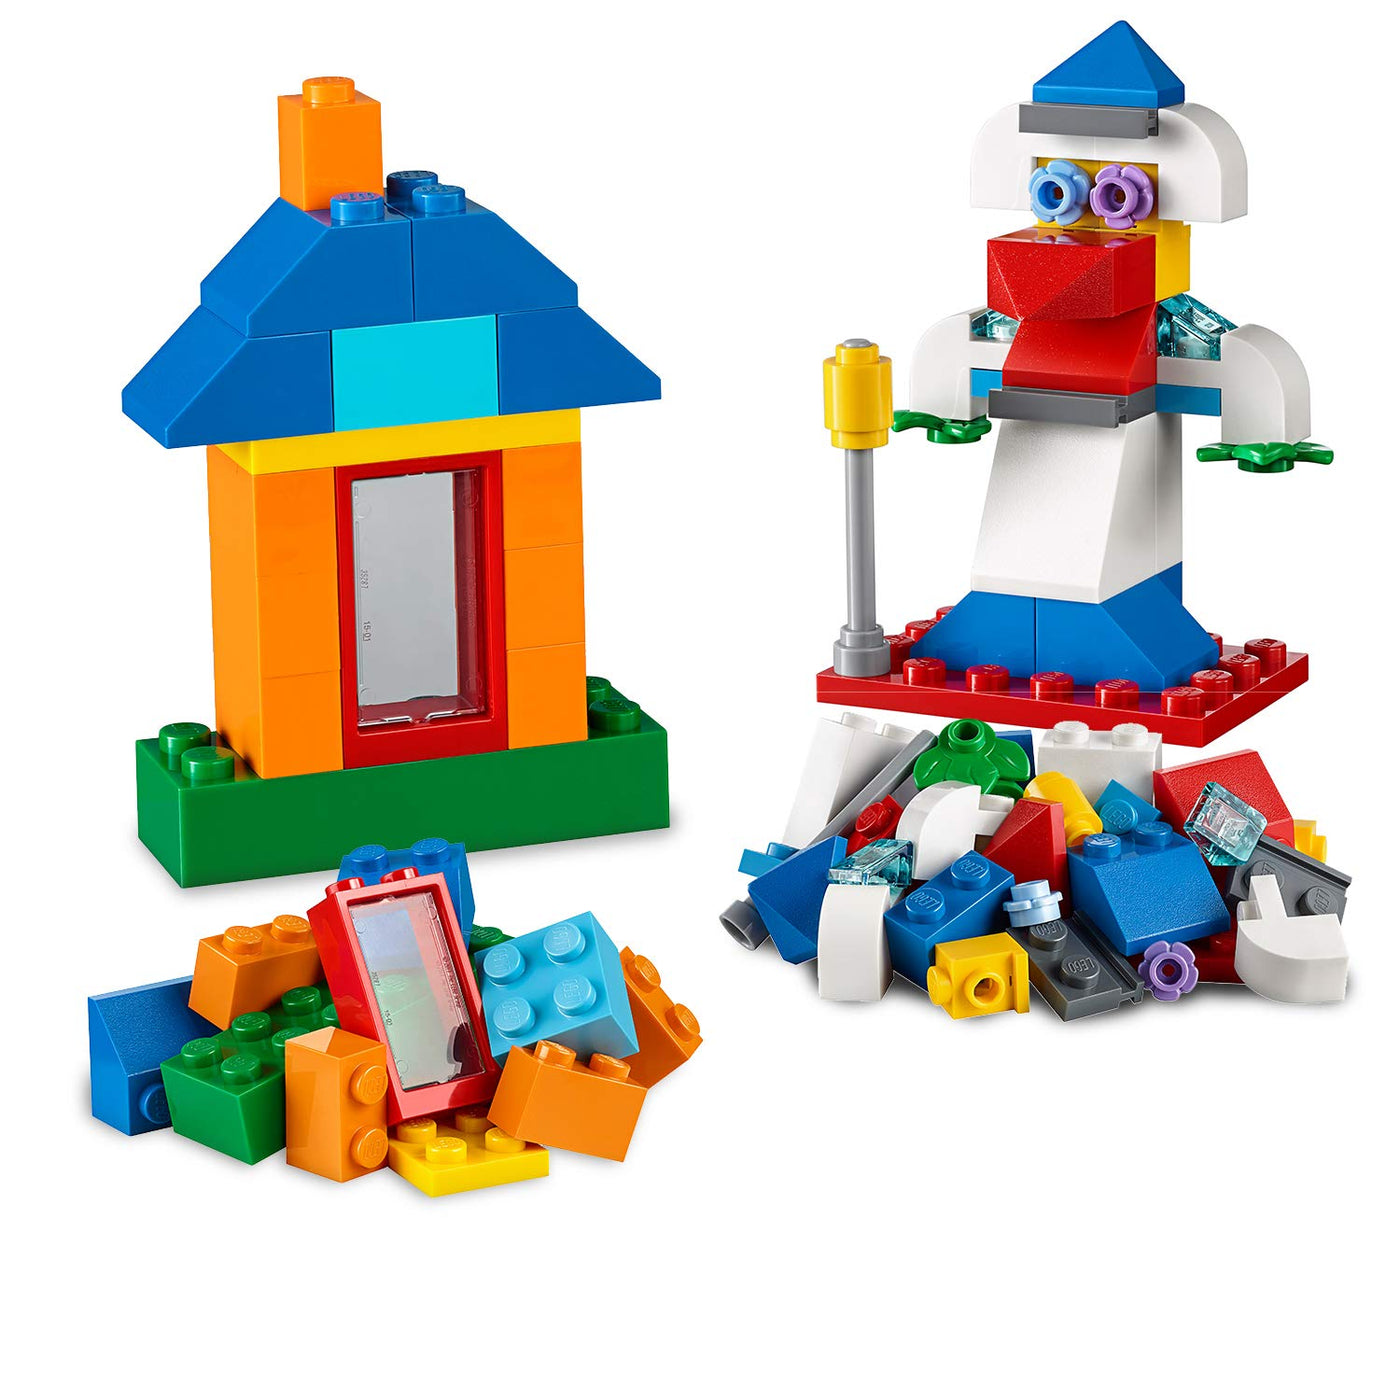 LEGO Classic Bricks and Houses, 11008